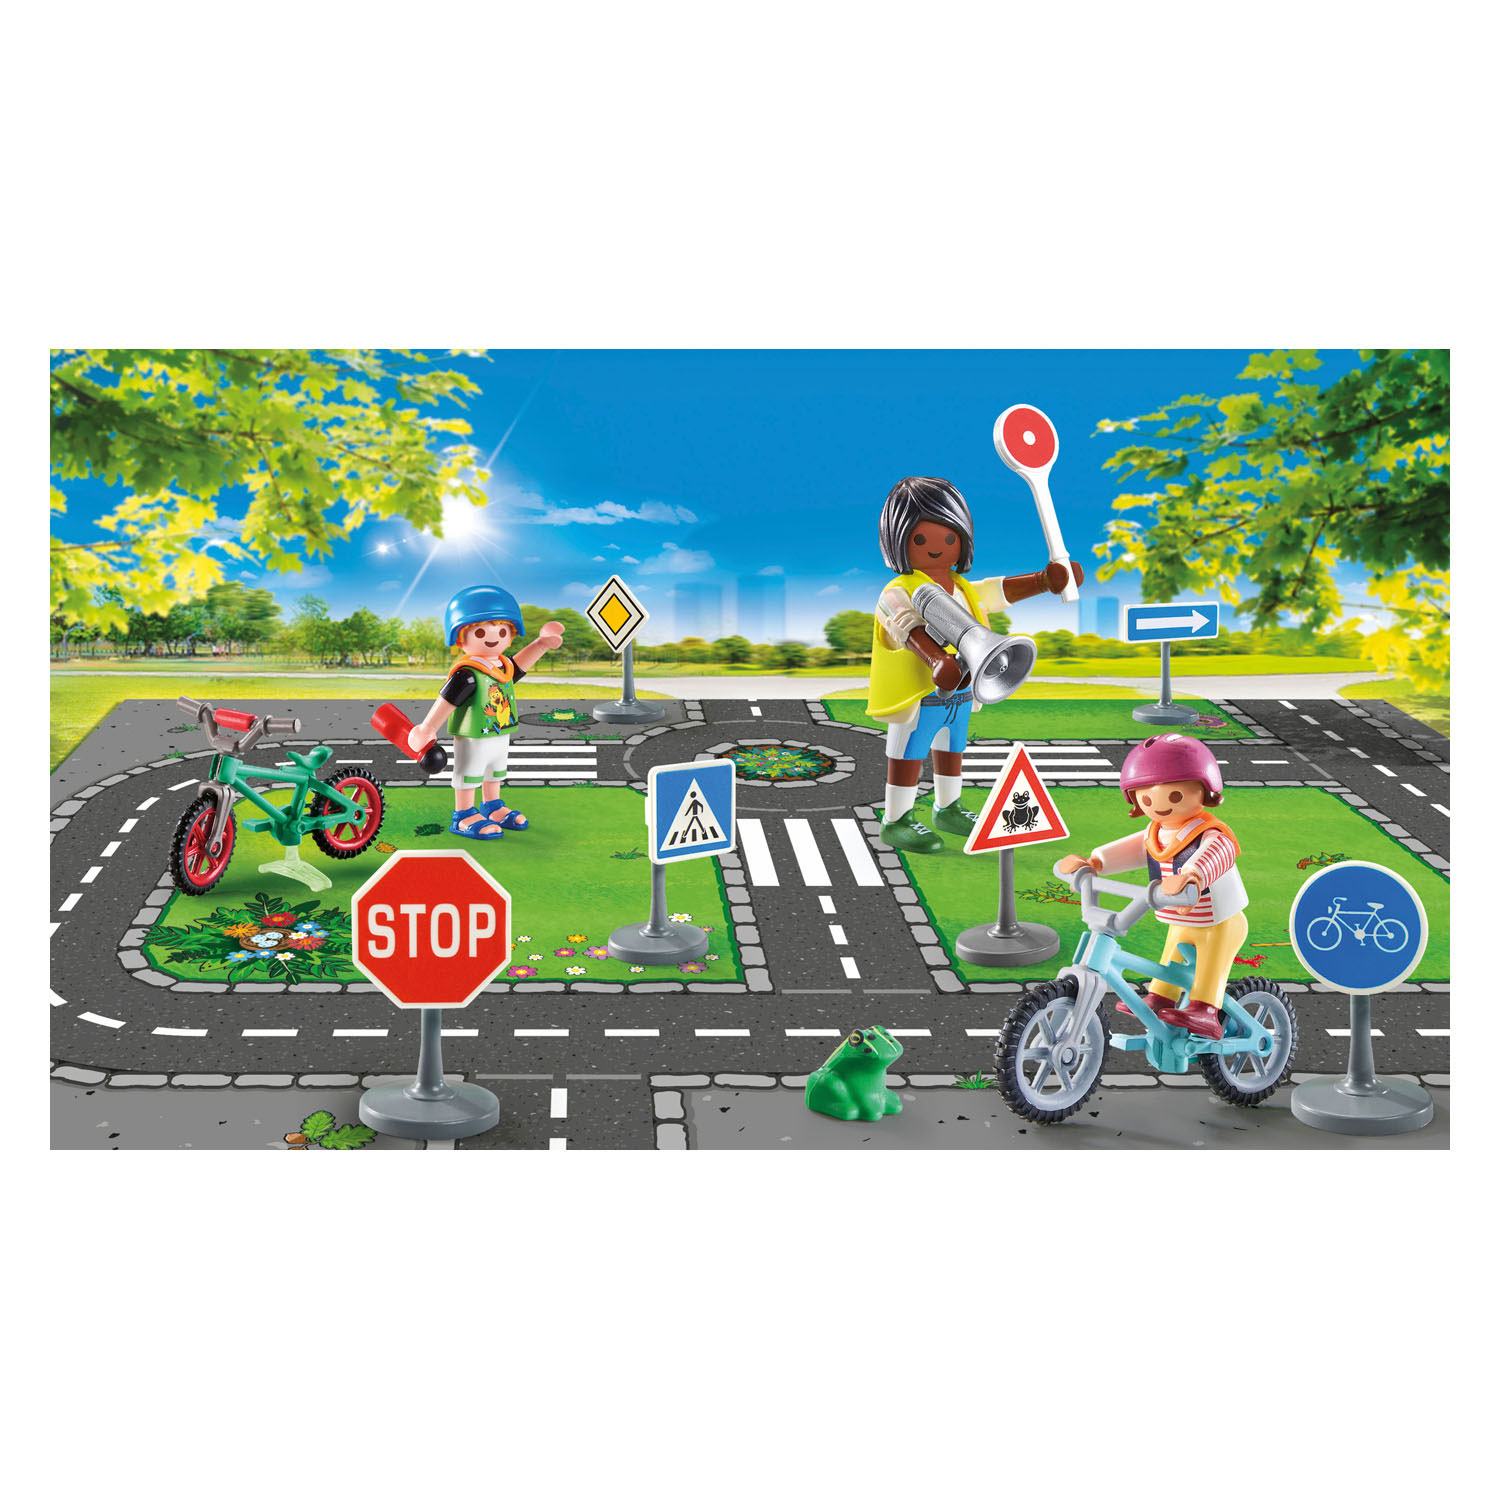 Playmobil City Life Éducation à la circulation - 71332